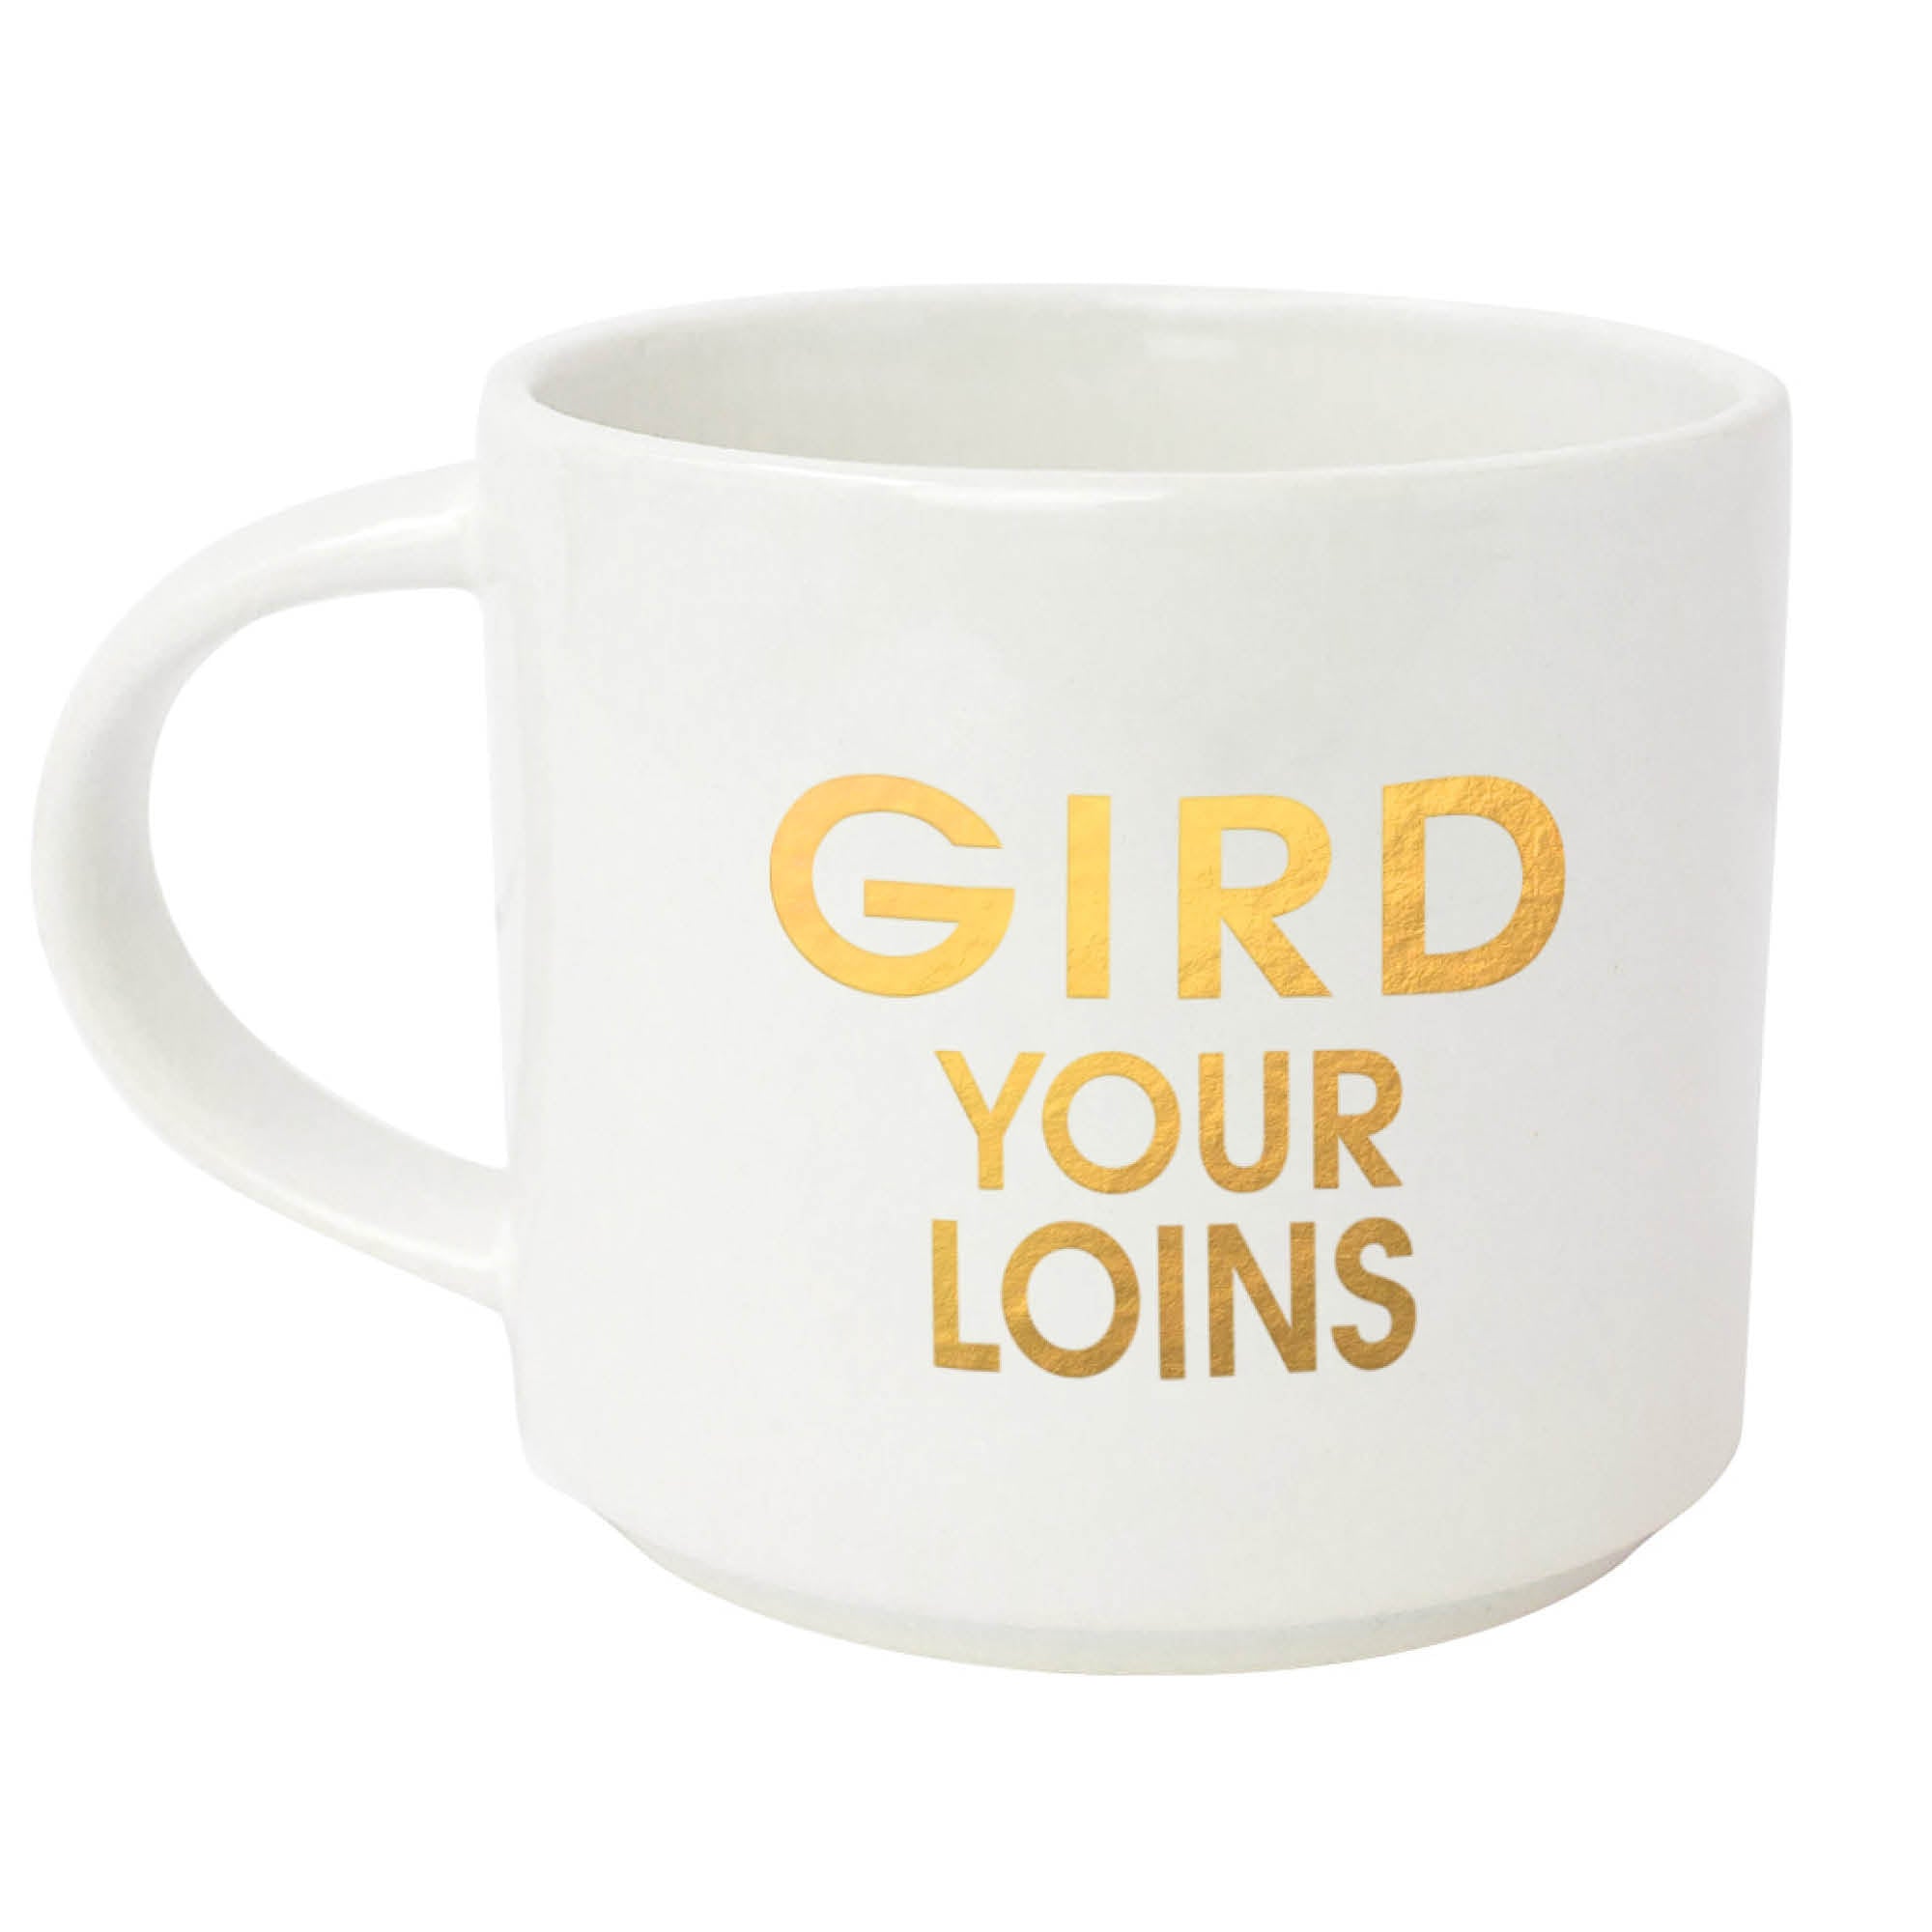 Gird Your Loins Gold Metallic Mug (Slight Imperfections)